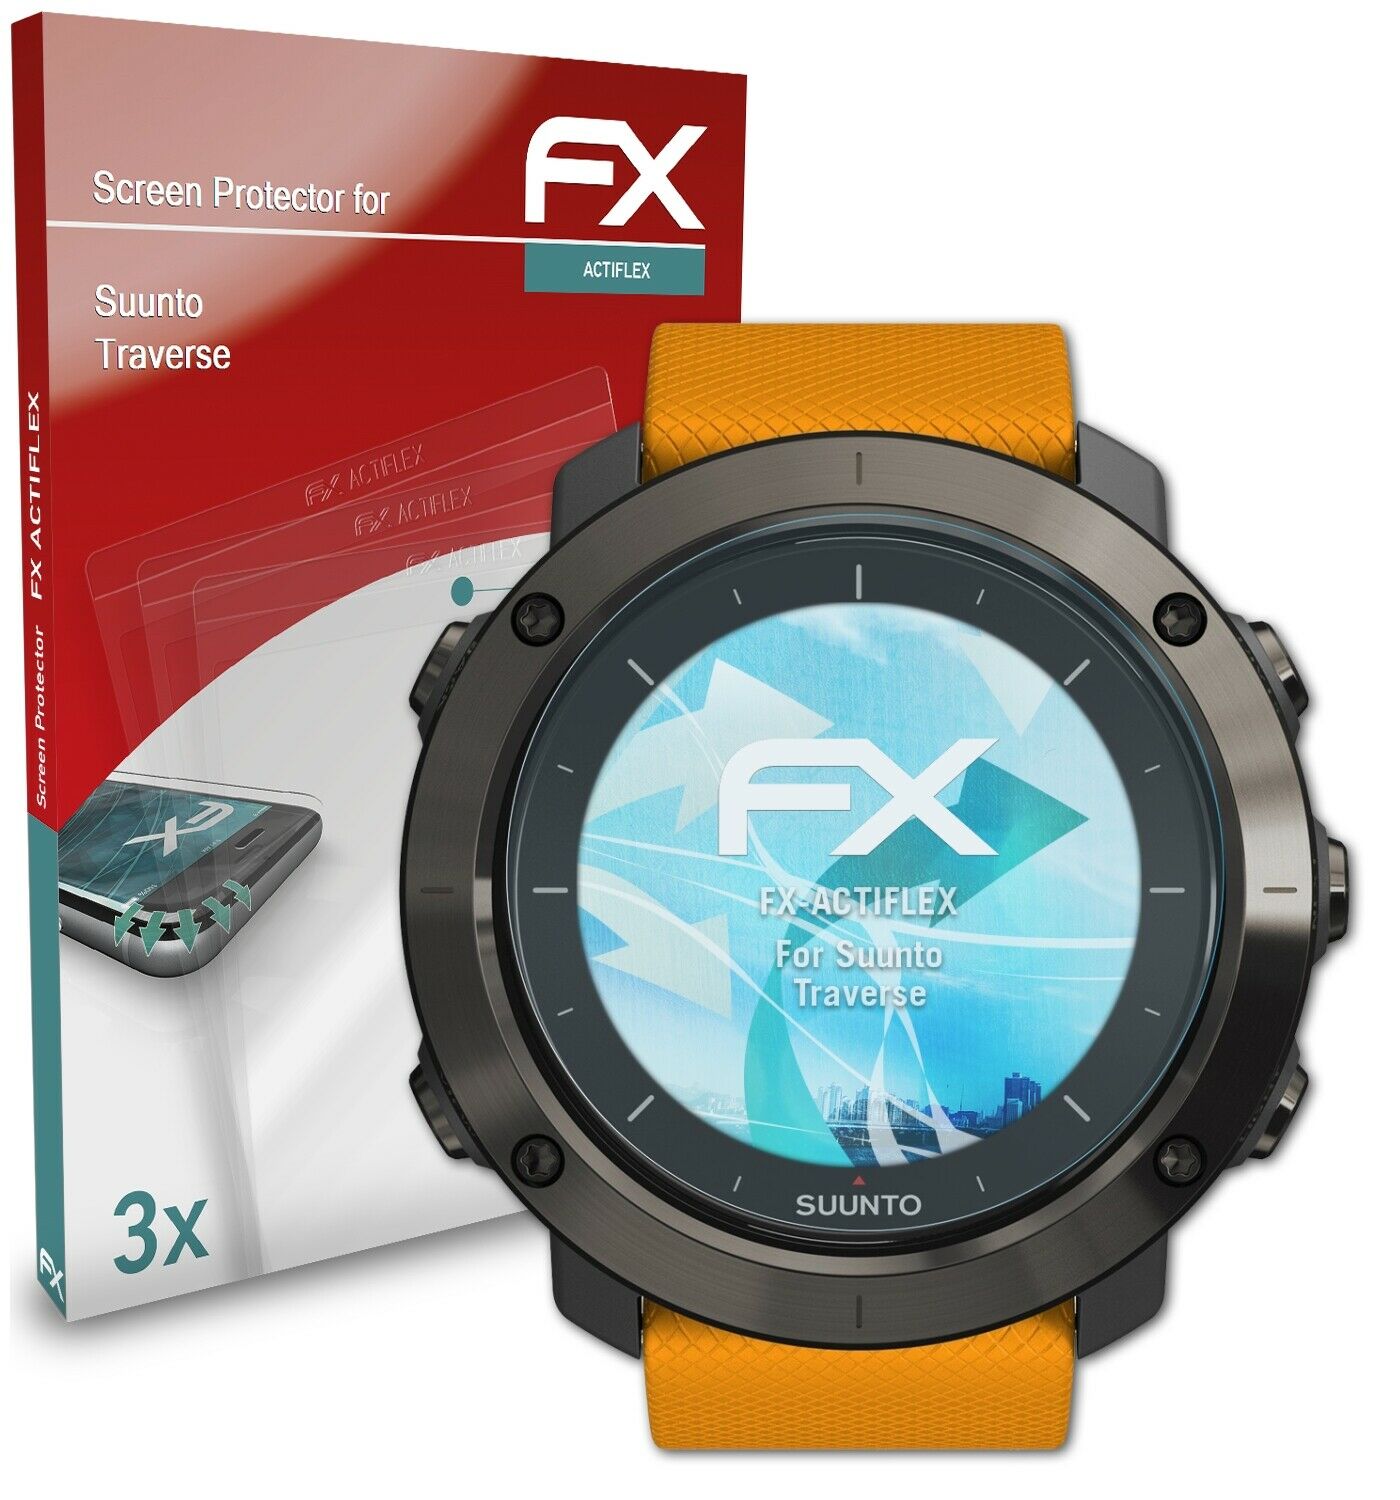 atFoliX 3x Screen Protector for Suunto Traverse Protective Film clear&flexible